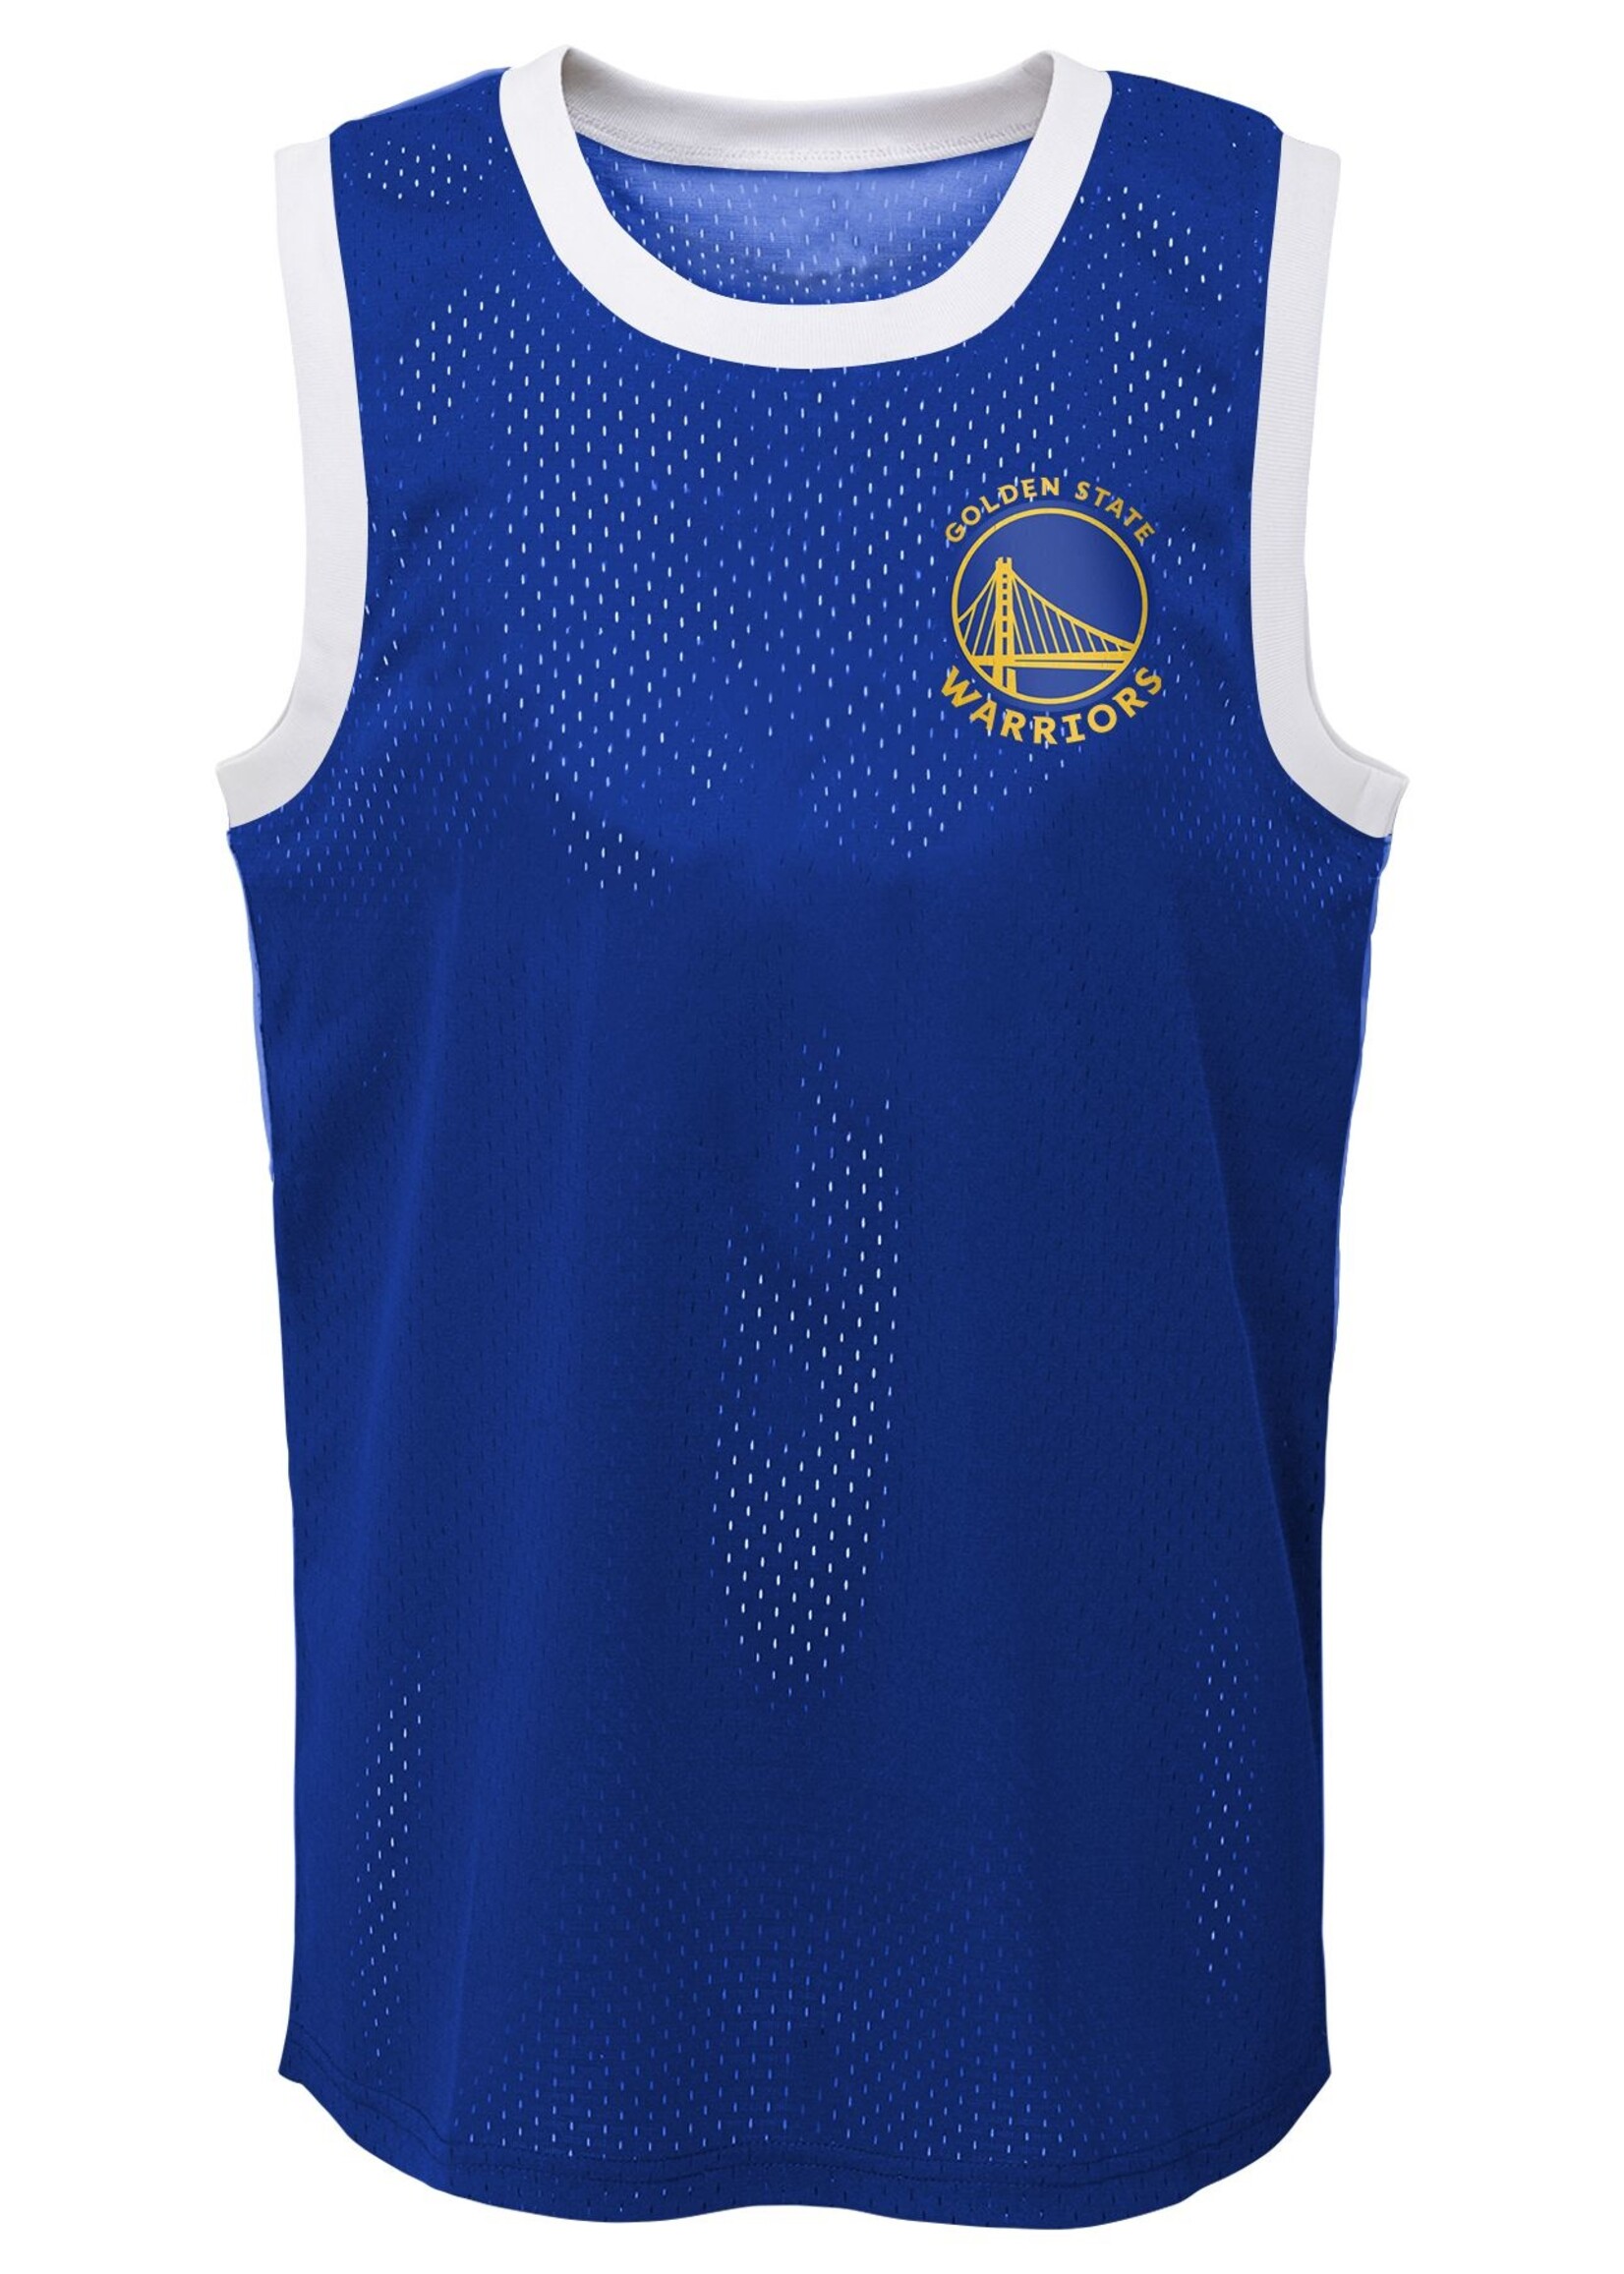 Outerstuff NBA Steph Curry Maillot Bleu (Logo Poitrine)